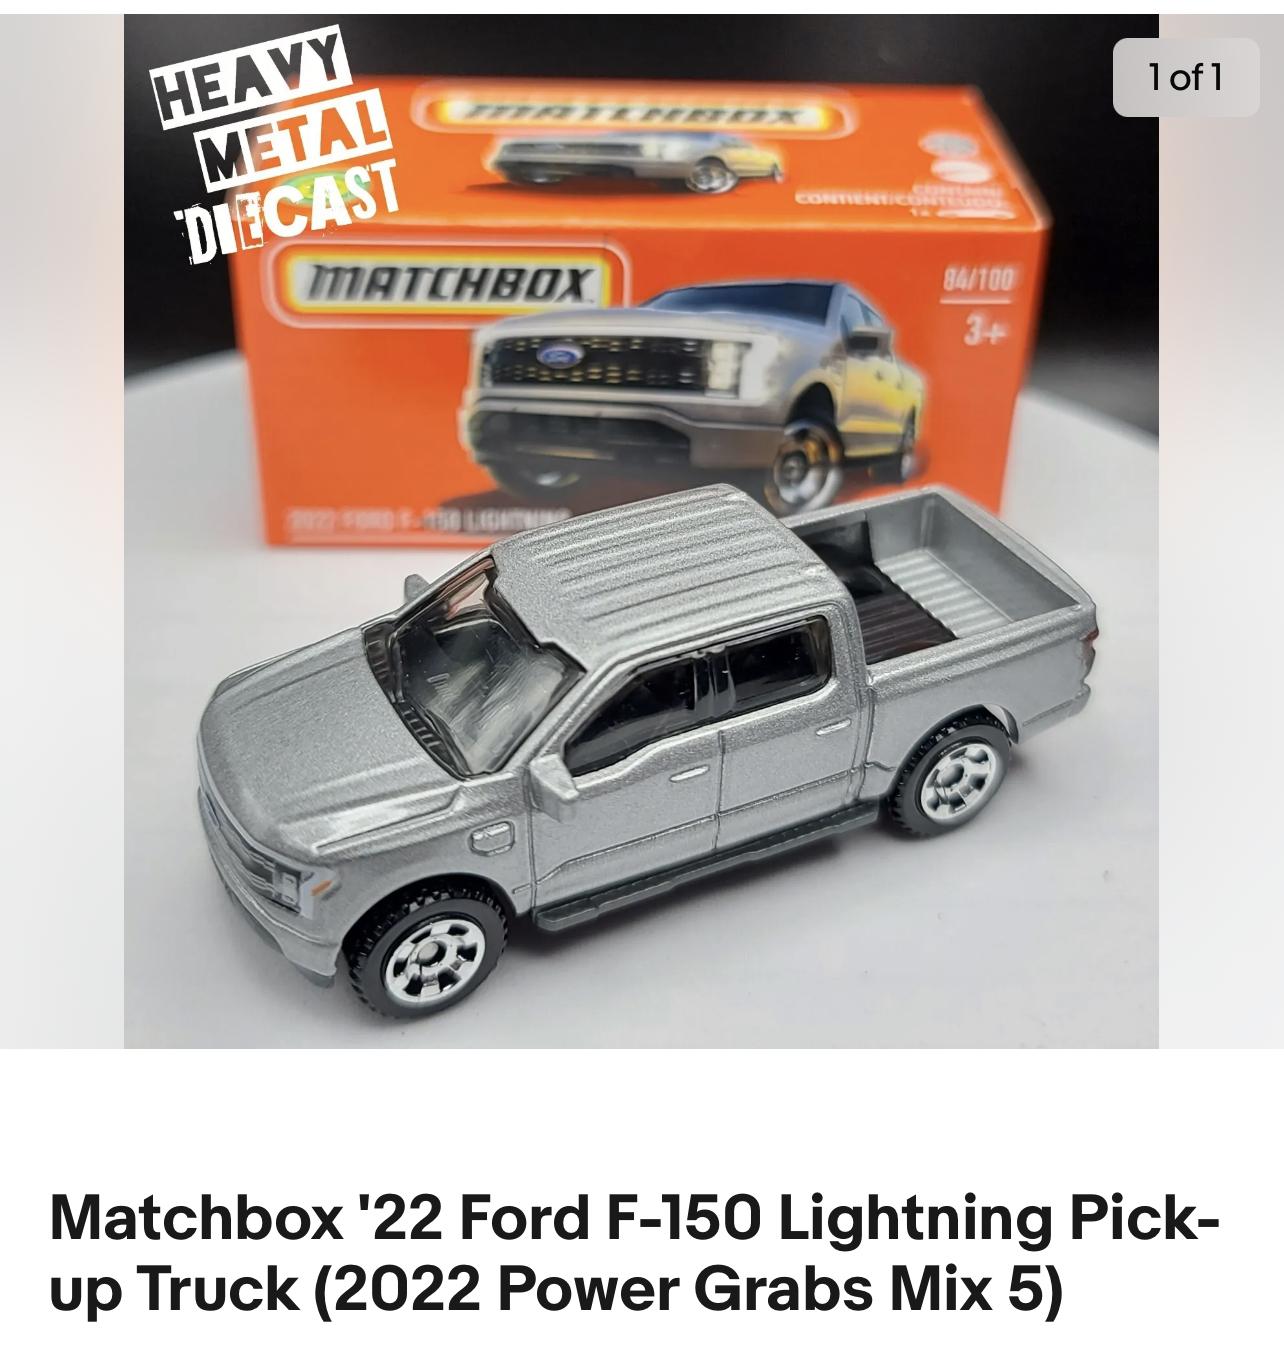 Ford F-150 Lightning The F-150 Lightning Toy & Memorabilia Thread 91D0C07E-DAD9-4A6C-9033-1E916F649CAA